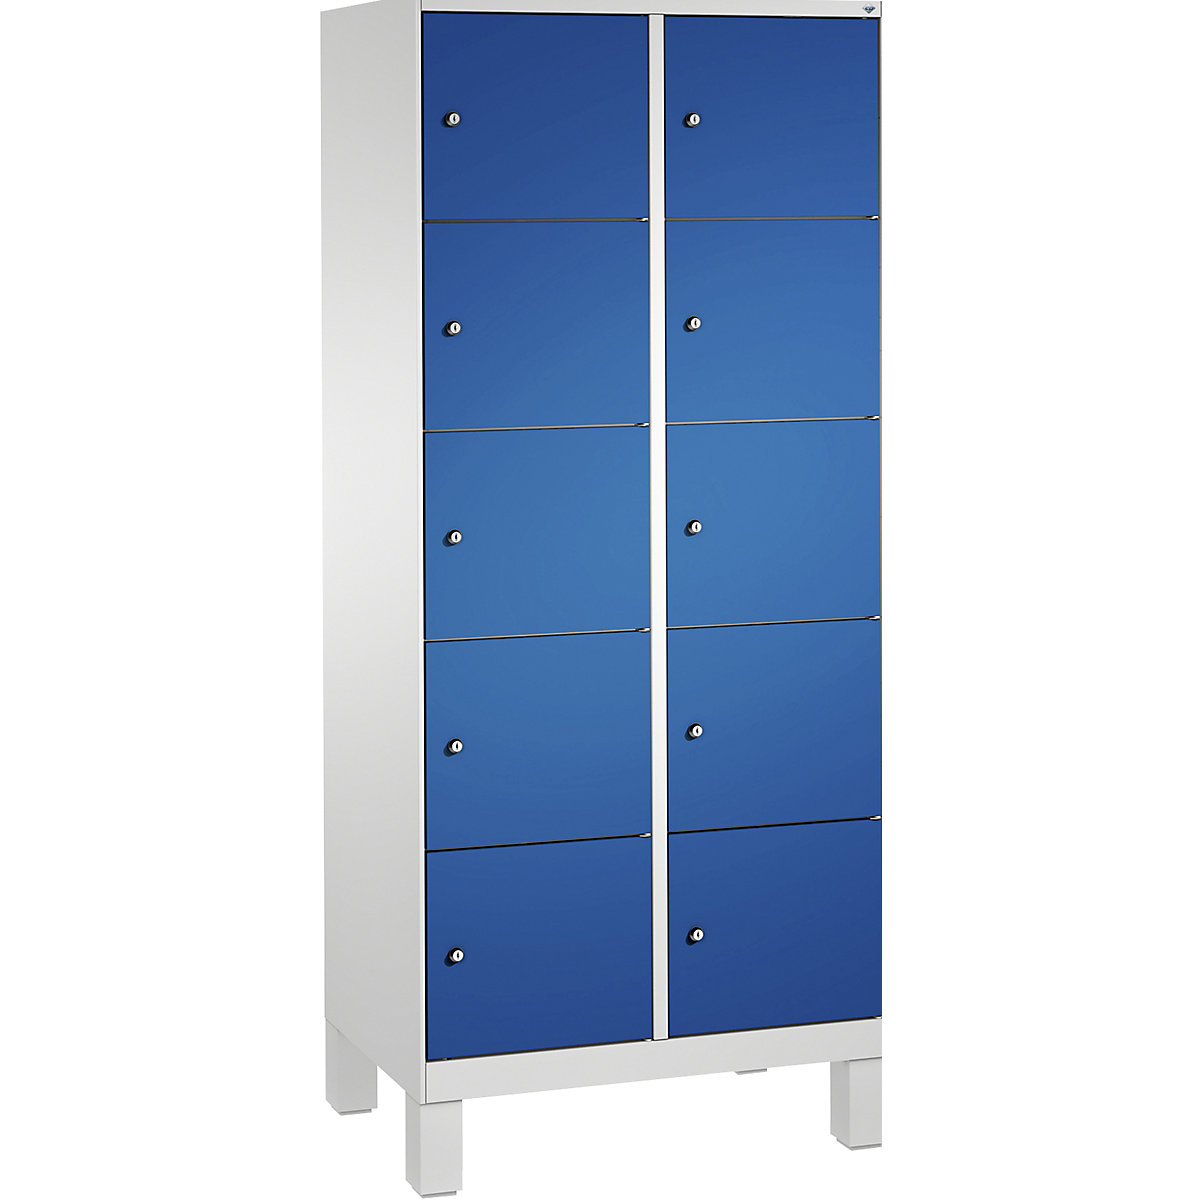 EVOLO locker unit, with feet – C+P, 2 compartments, 5 shelf compartments each, compartment width 400 mm, light grey / gentian blue-2